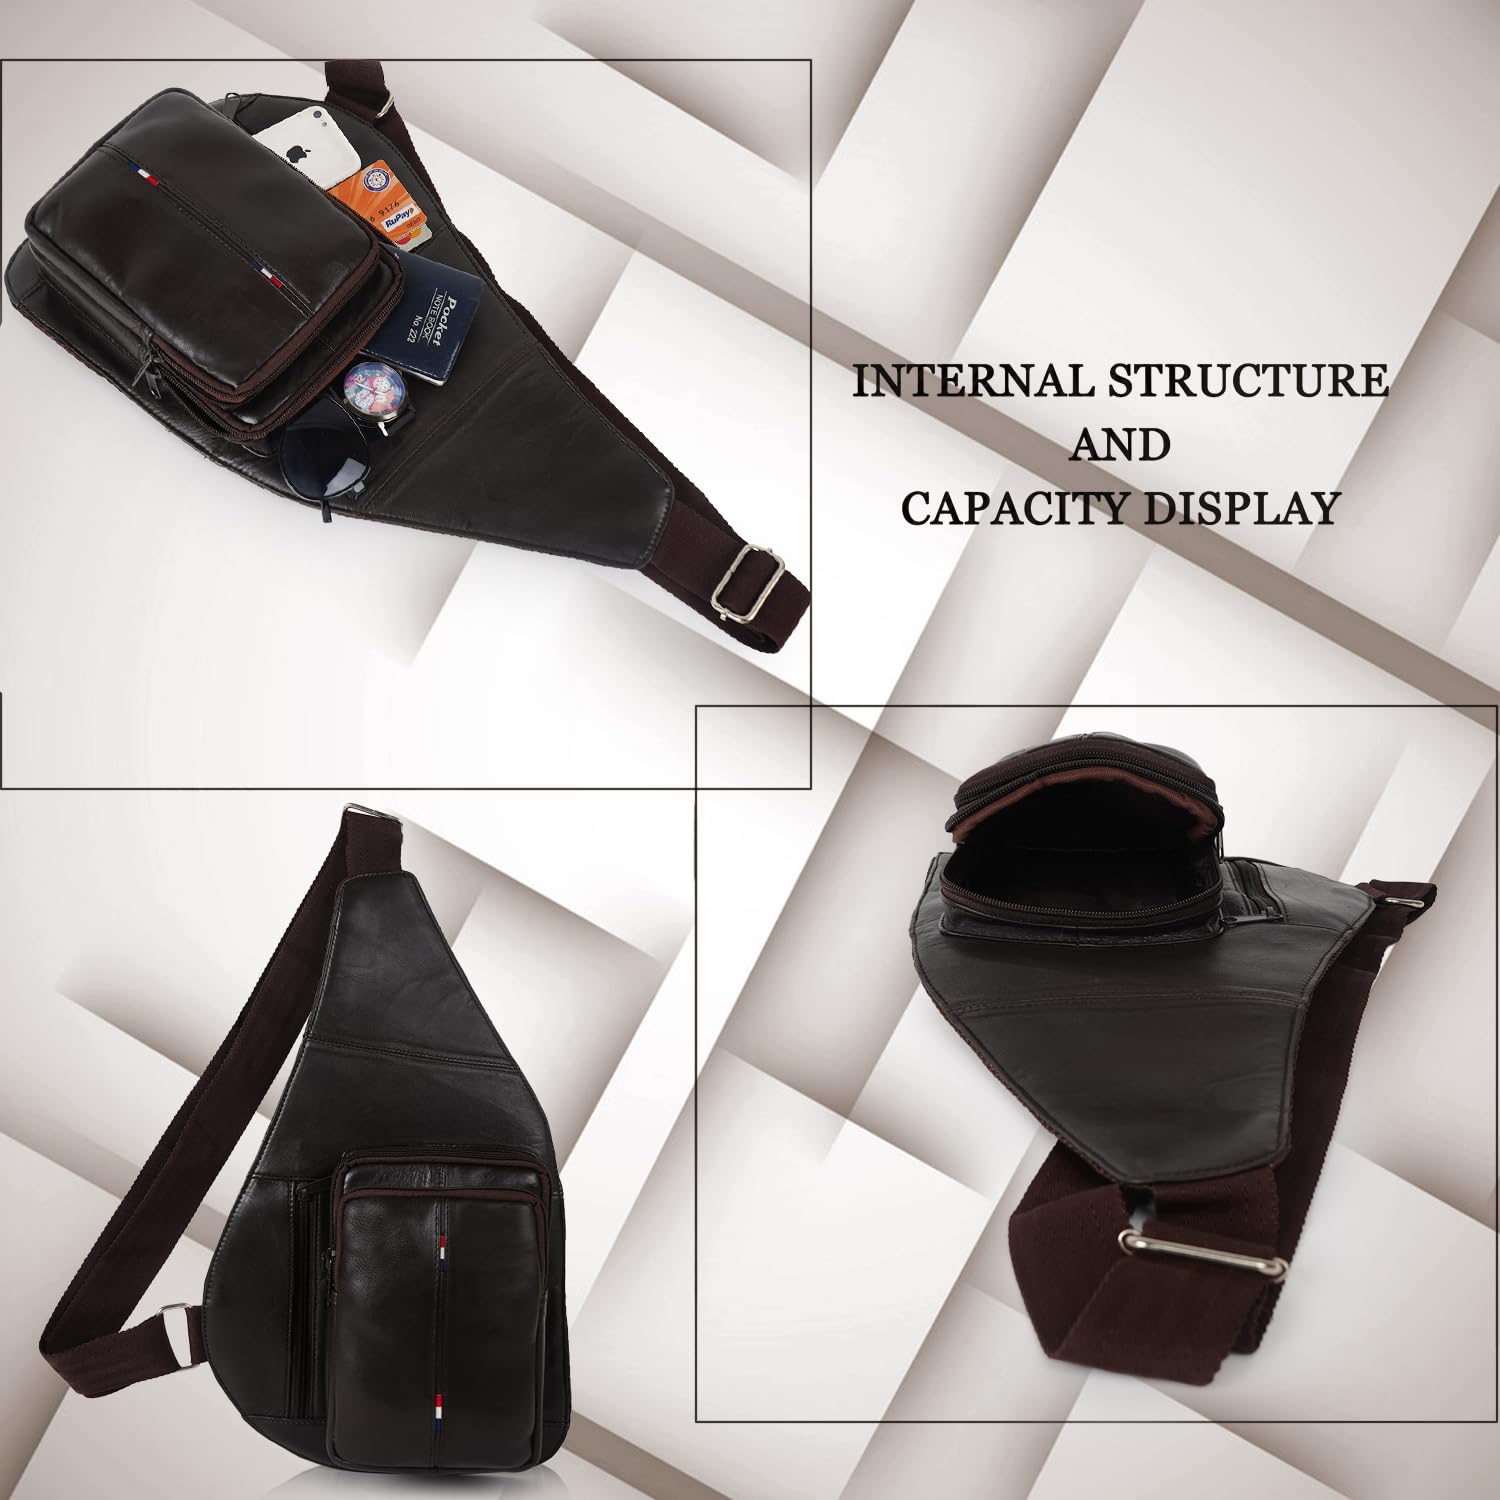 CIMONI® Premium Genuine Leather Cross Body Bag Outdoor Small Shoulder Side Purse Unisex Chest Bag External Mobile Zipper Pocket (Color - Brown)